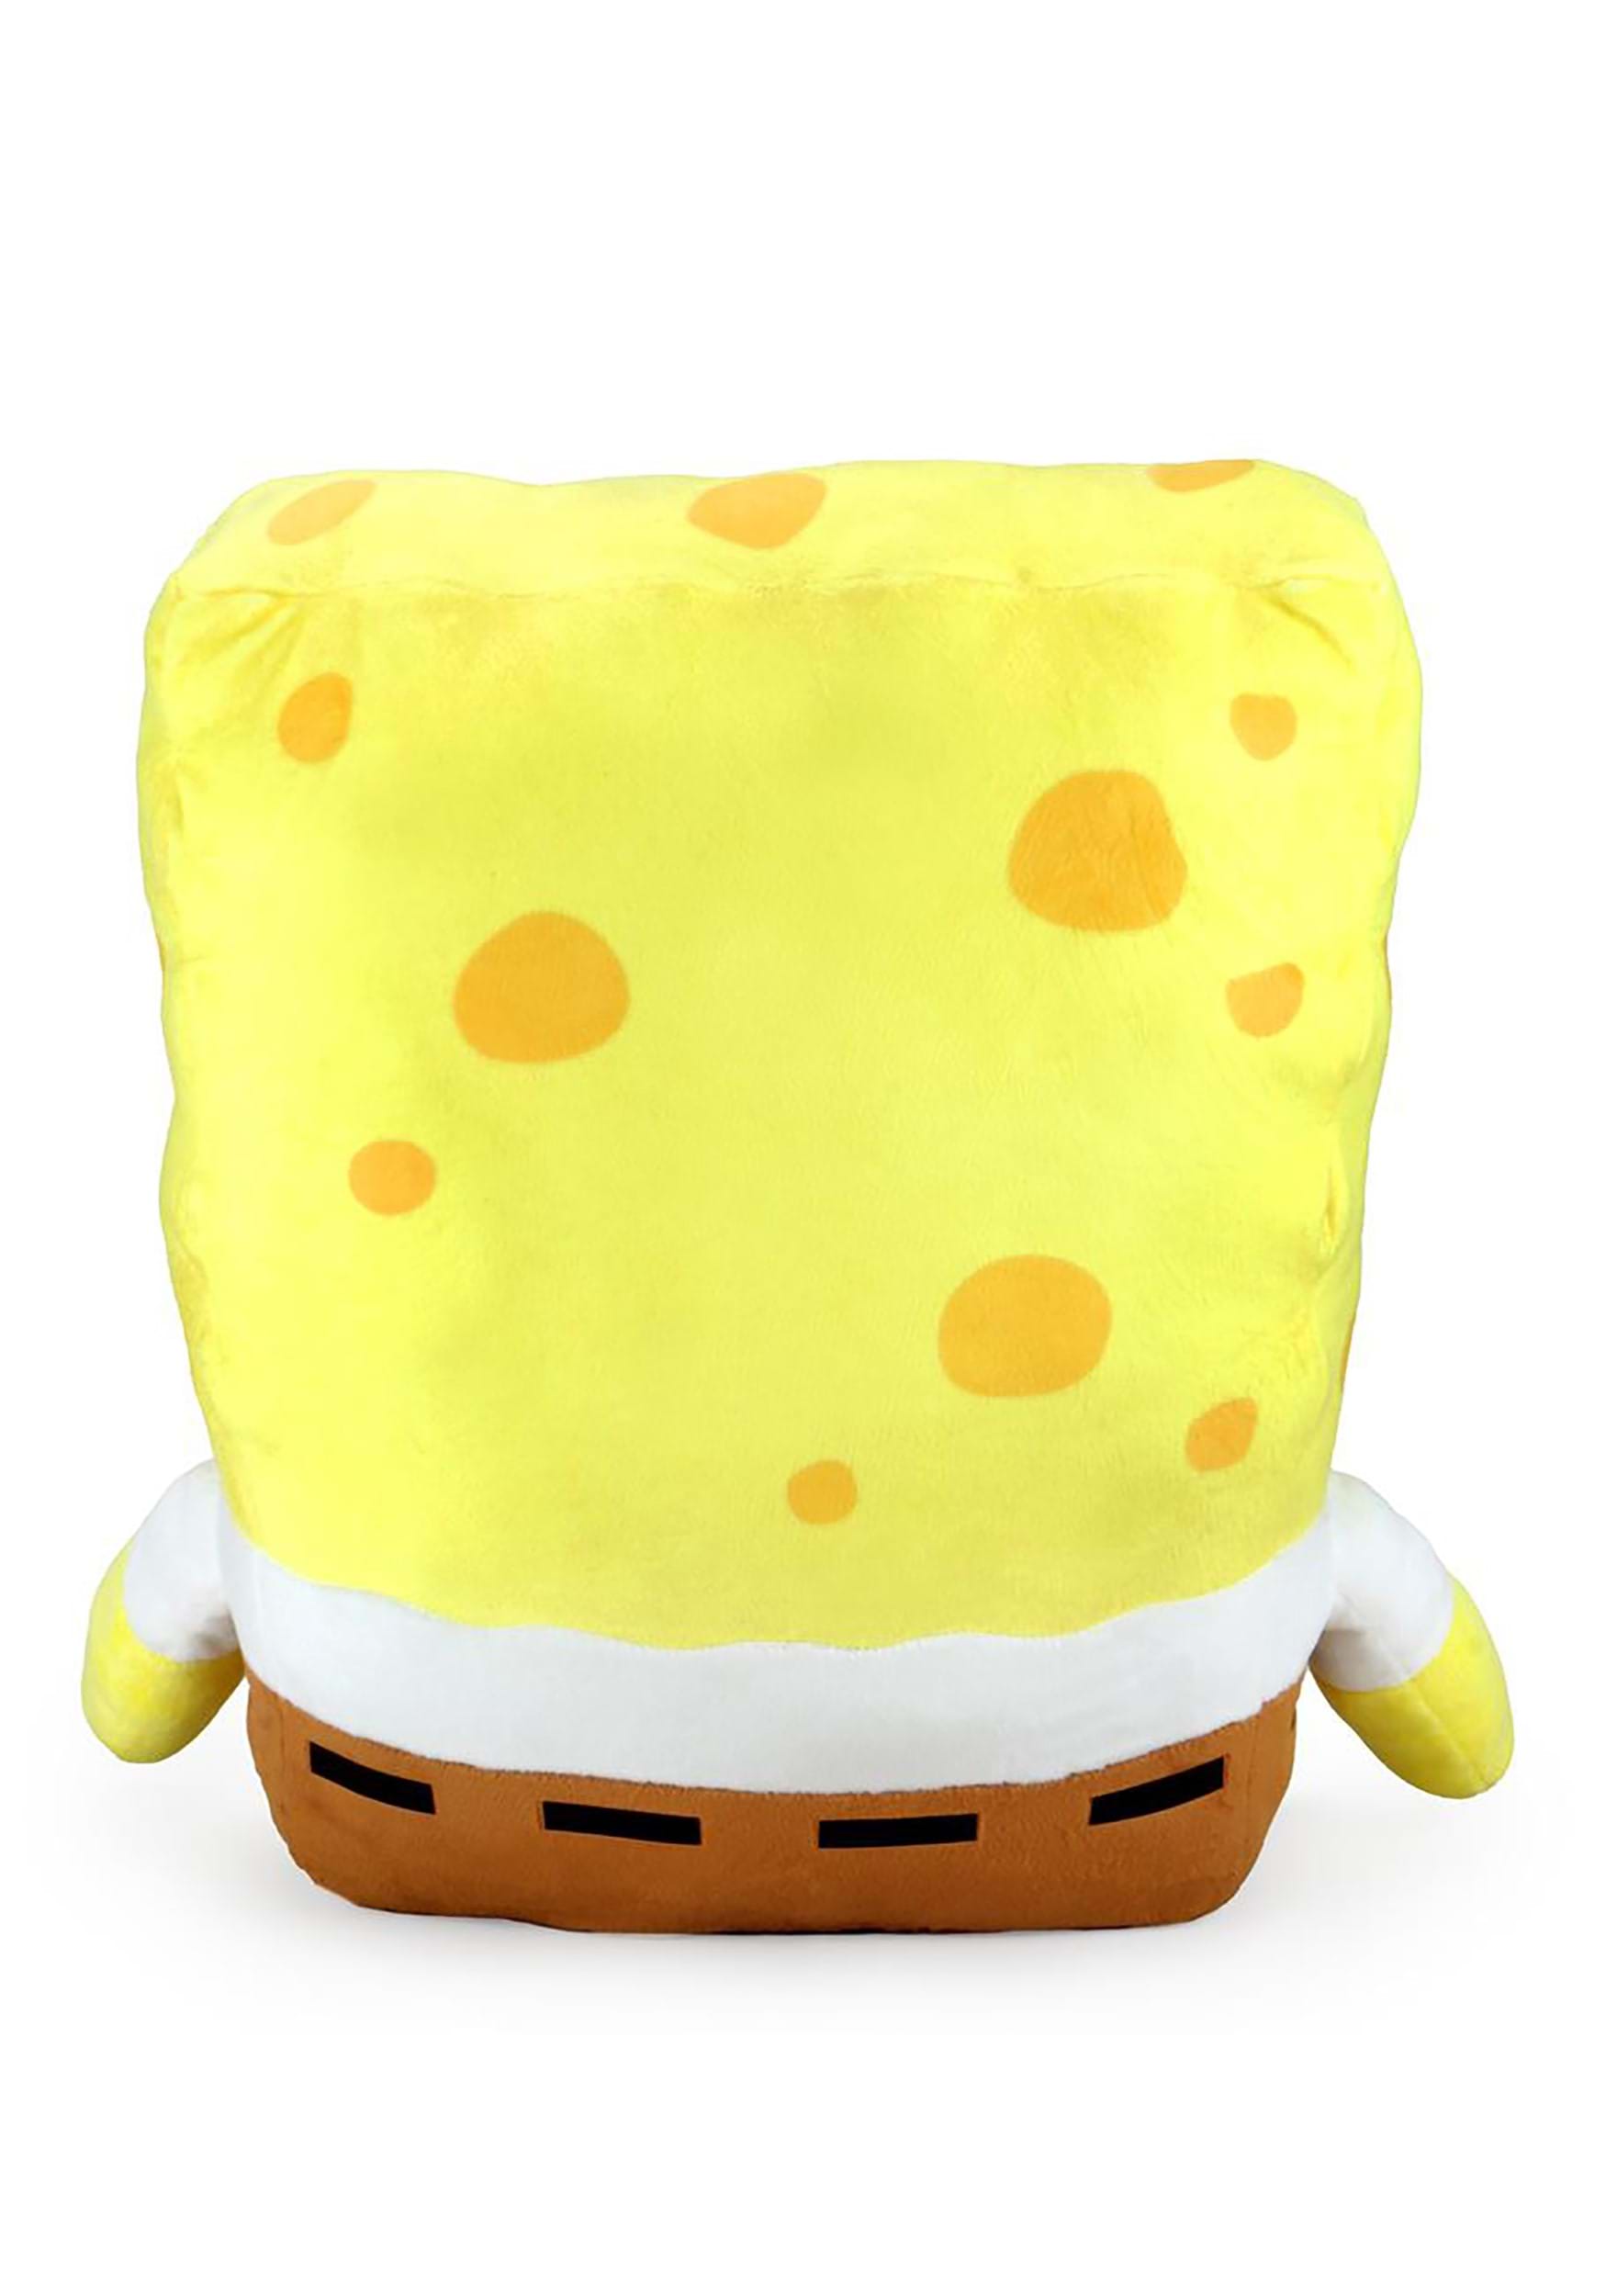 Nickelodeon SpongeBob Squarepants 15 Inch Medium Plush